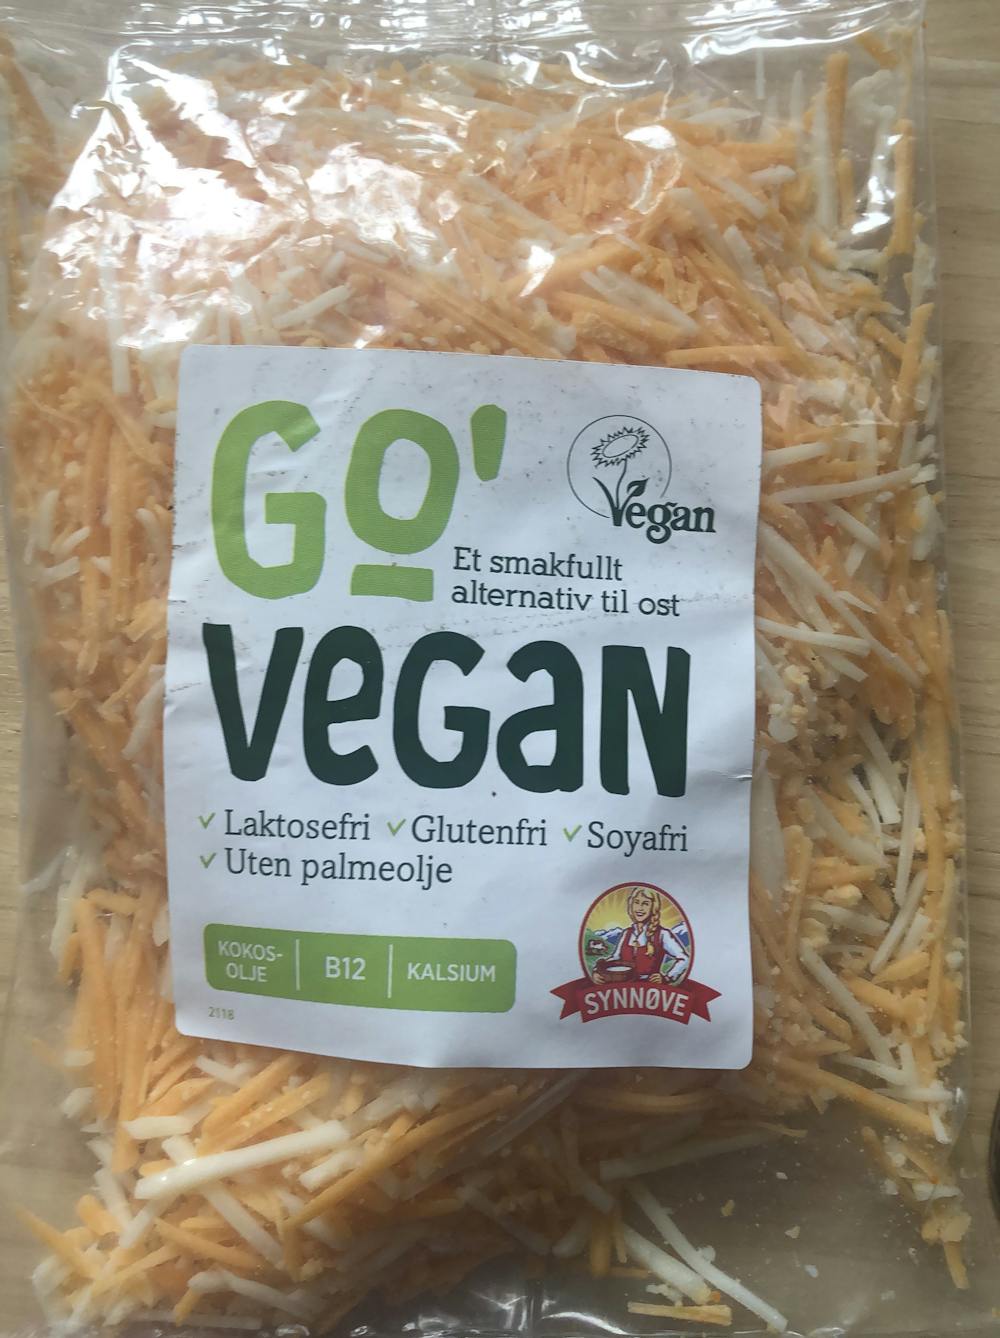 Go' vegan Et smakfult alternativ til ost strøost, Synnøve